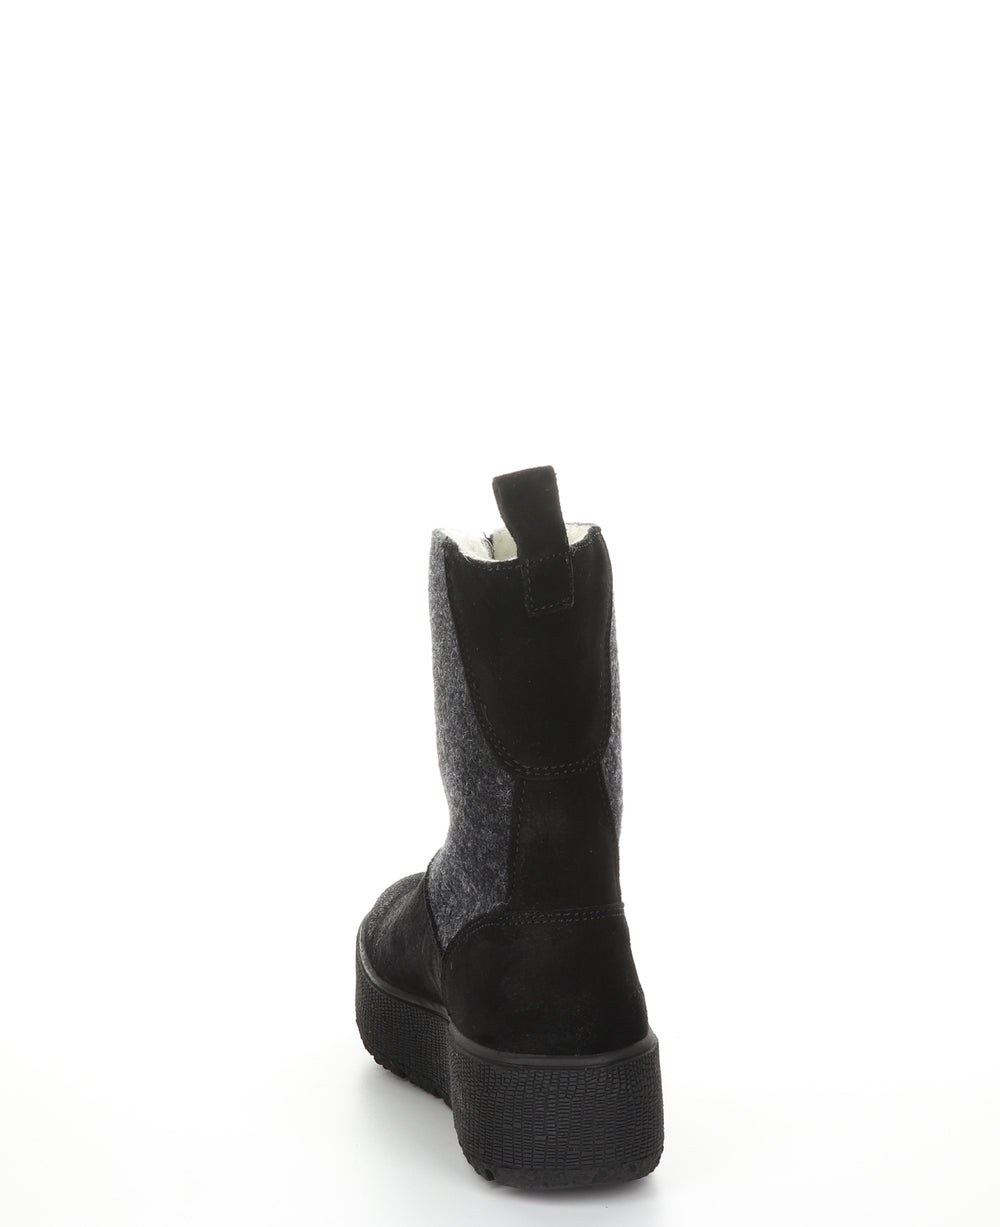 IGNITE Black Zip Up Boots|IGNITE Bottes avec Fermeture Zippée in Noir